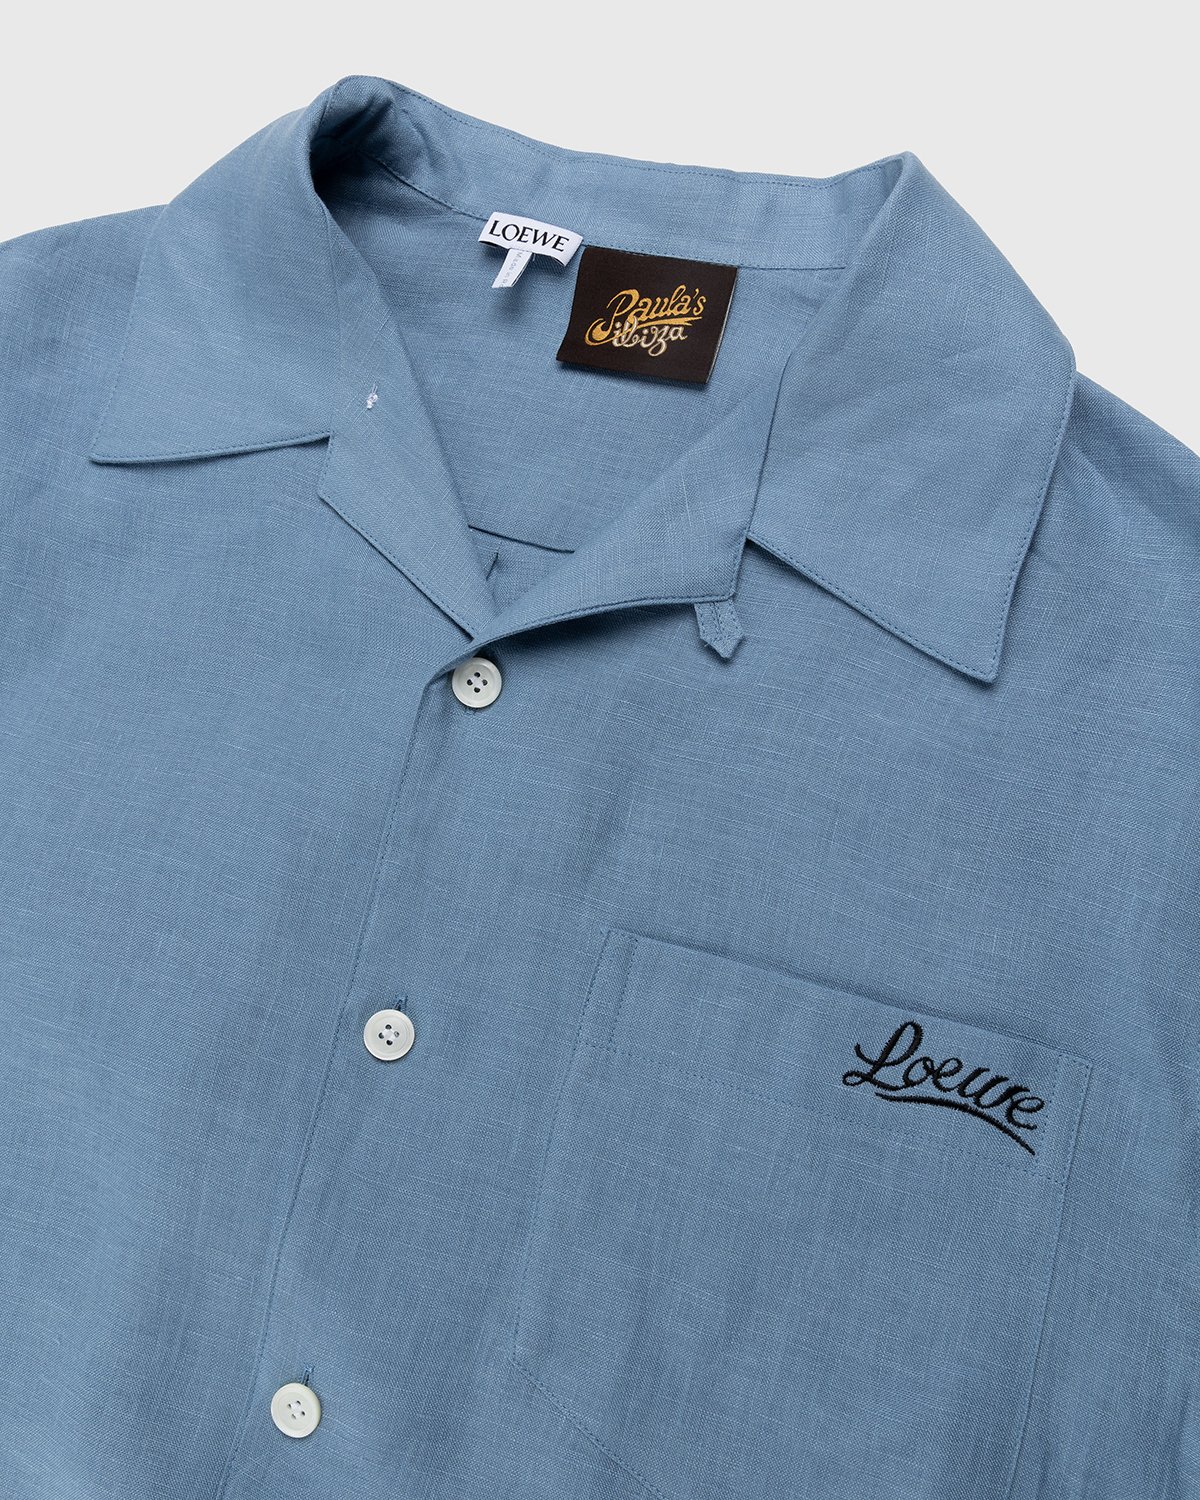 Loewe - Paula's Ibiza Linen Bowling Shirt Blue - Clothing - Blue - Image 4